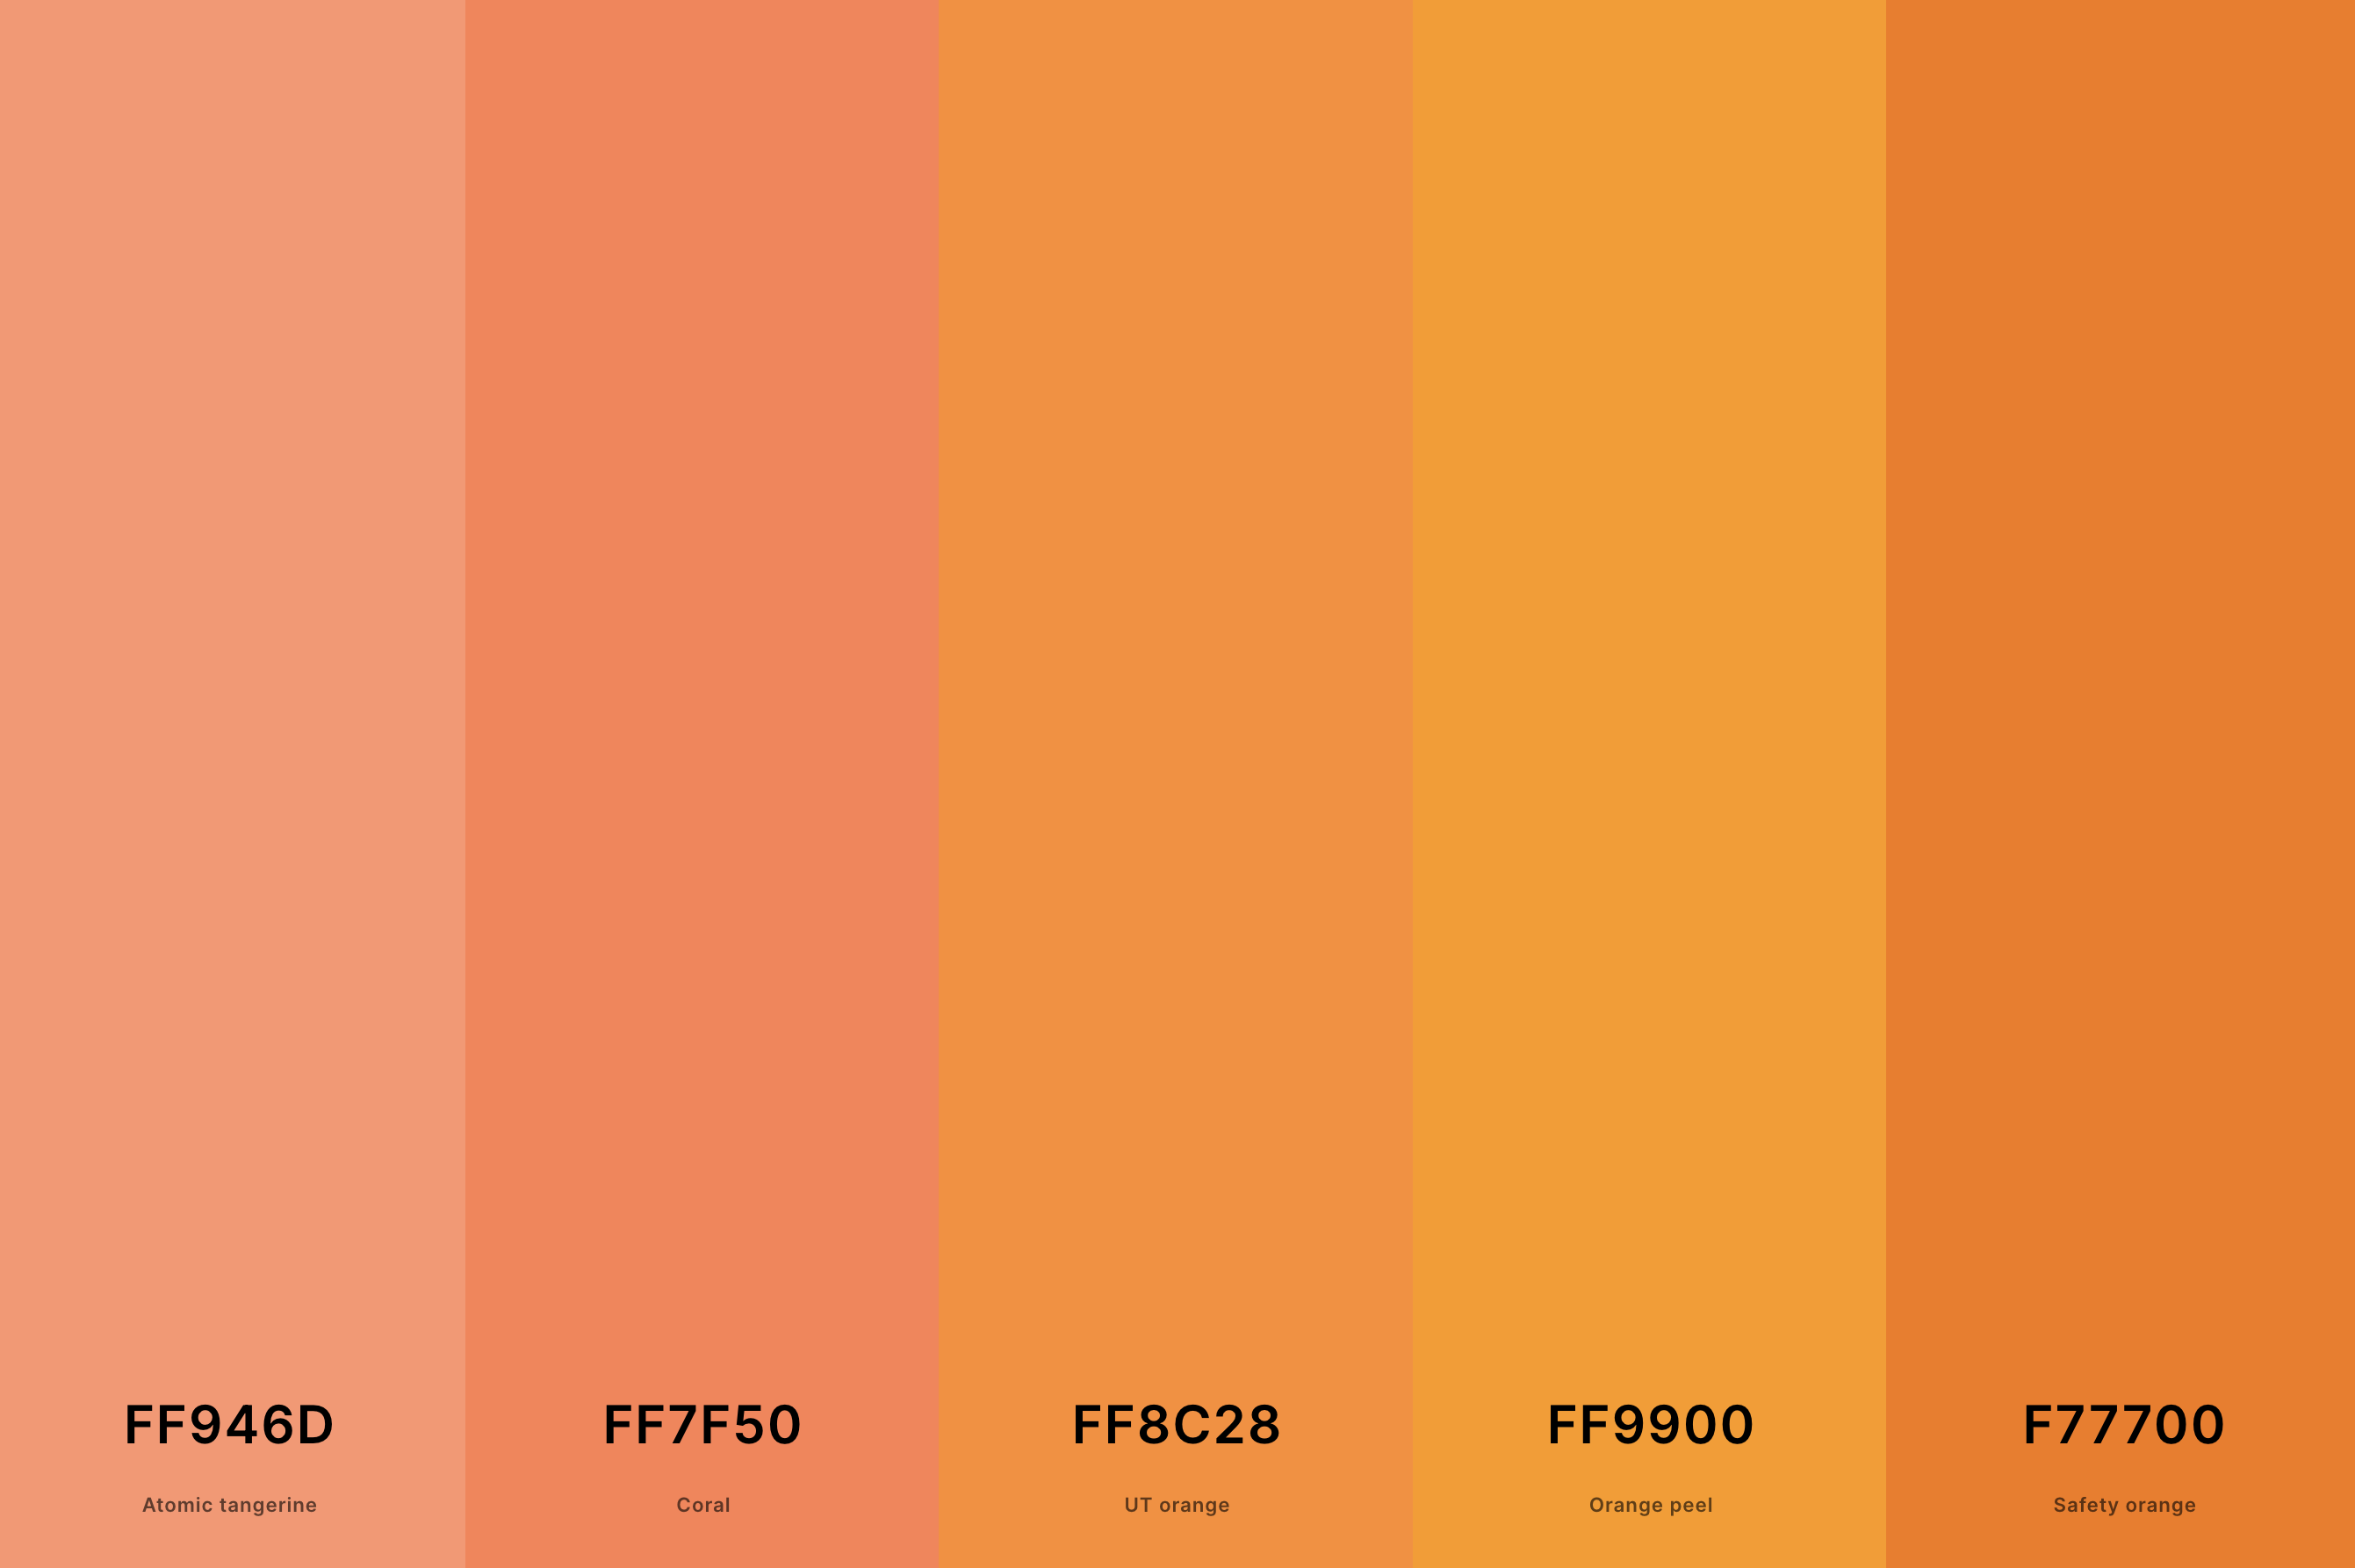 13. Coral And Orange Color Palette Color Palette with Atomic Tangerine (Hex #FF946D) + Coral (Hex #FF7F50) + Ut Orange (Hex #FF8C28) + Orange Peel (Hex #FF9900) + Safety Orange (Hex #F77700) Color Palette with Hex Codes